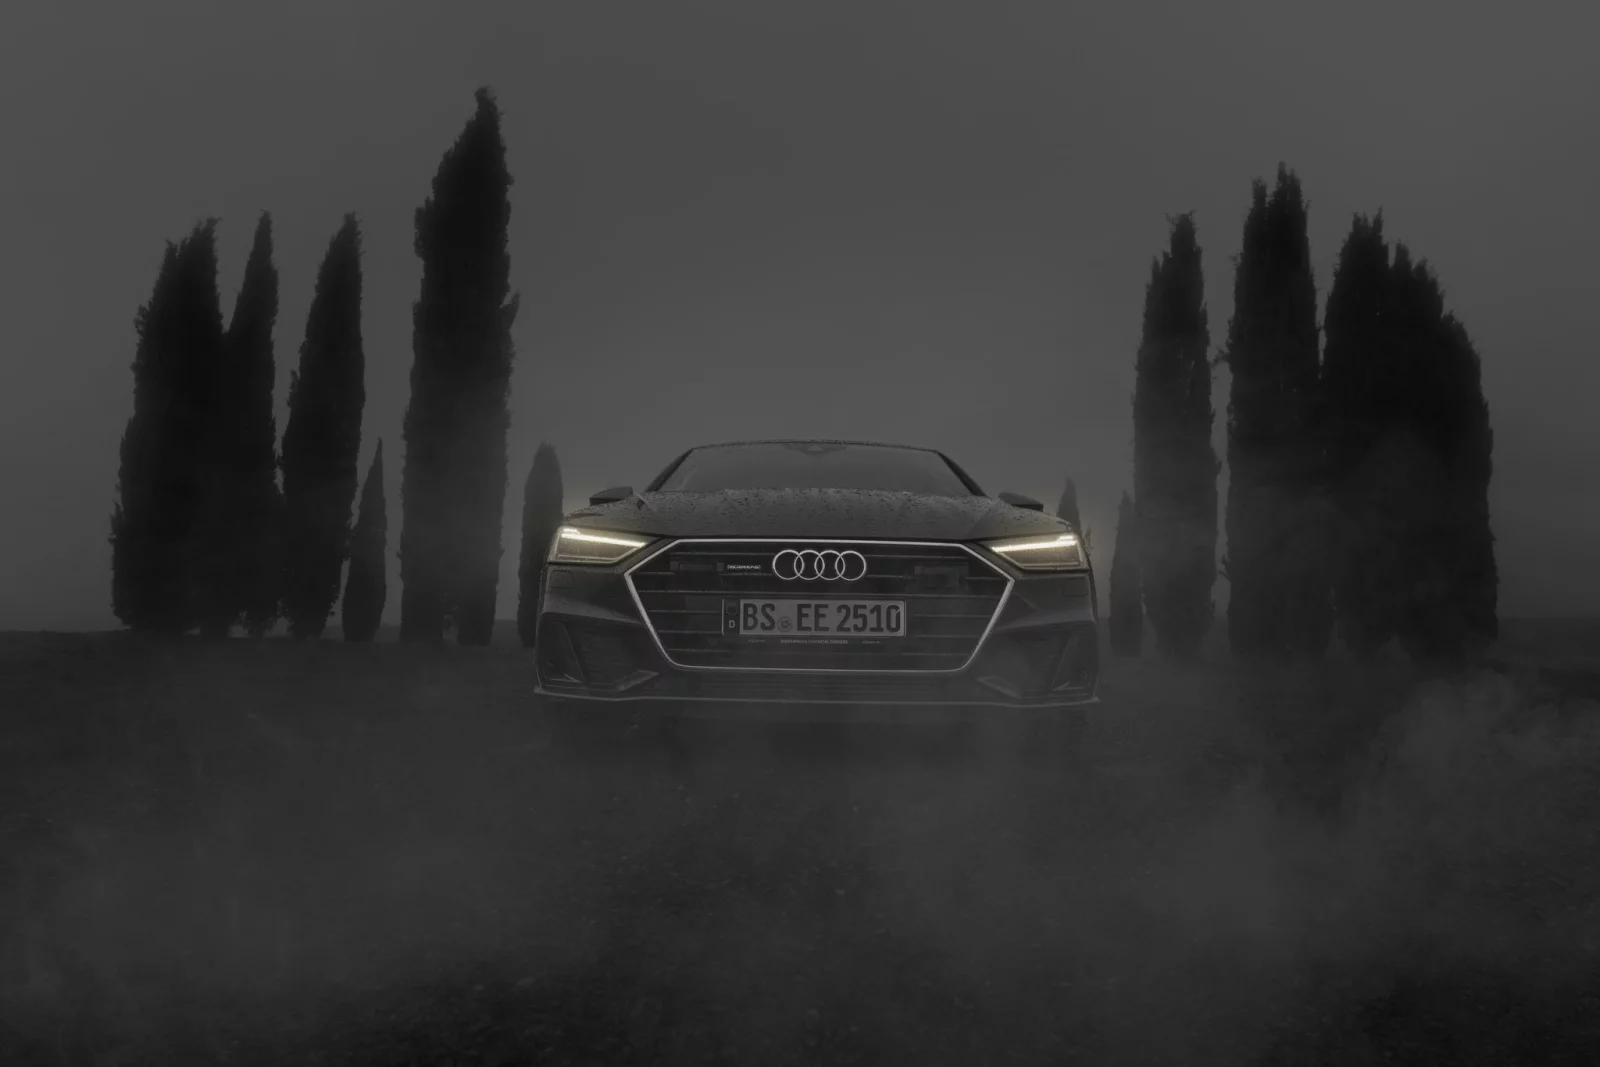 Audi A7 Download Hd Wallpapers - Wallpaperforu